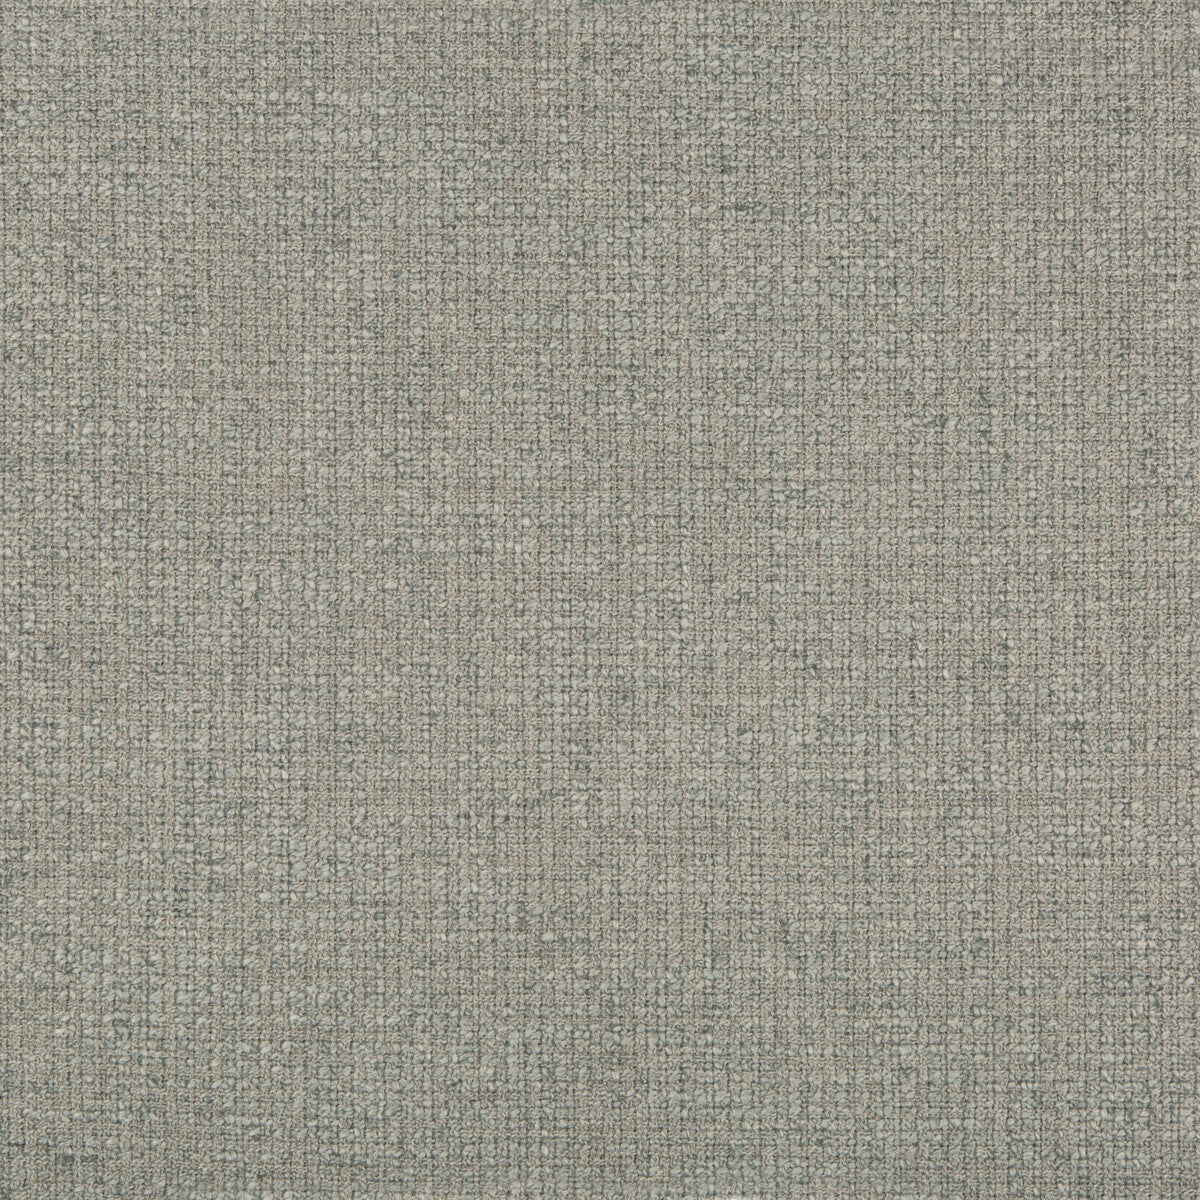 Kravet Smart fabric in 35329-521 color - pattern 35329.521.0 - by Kravet Smart in the Performance Kravetarmor collection